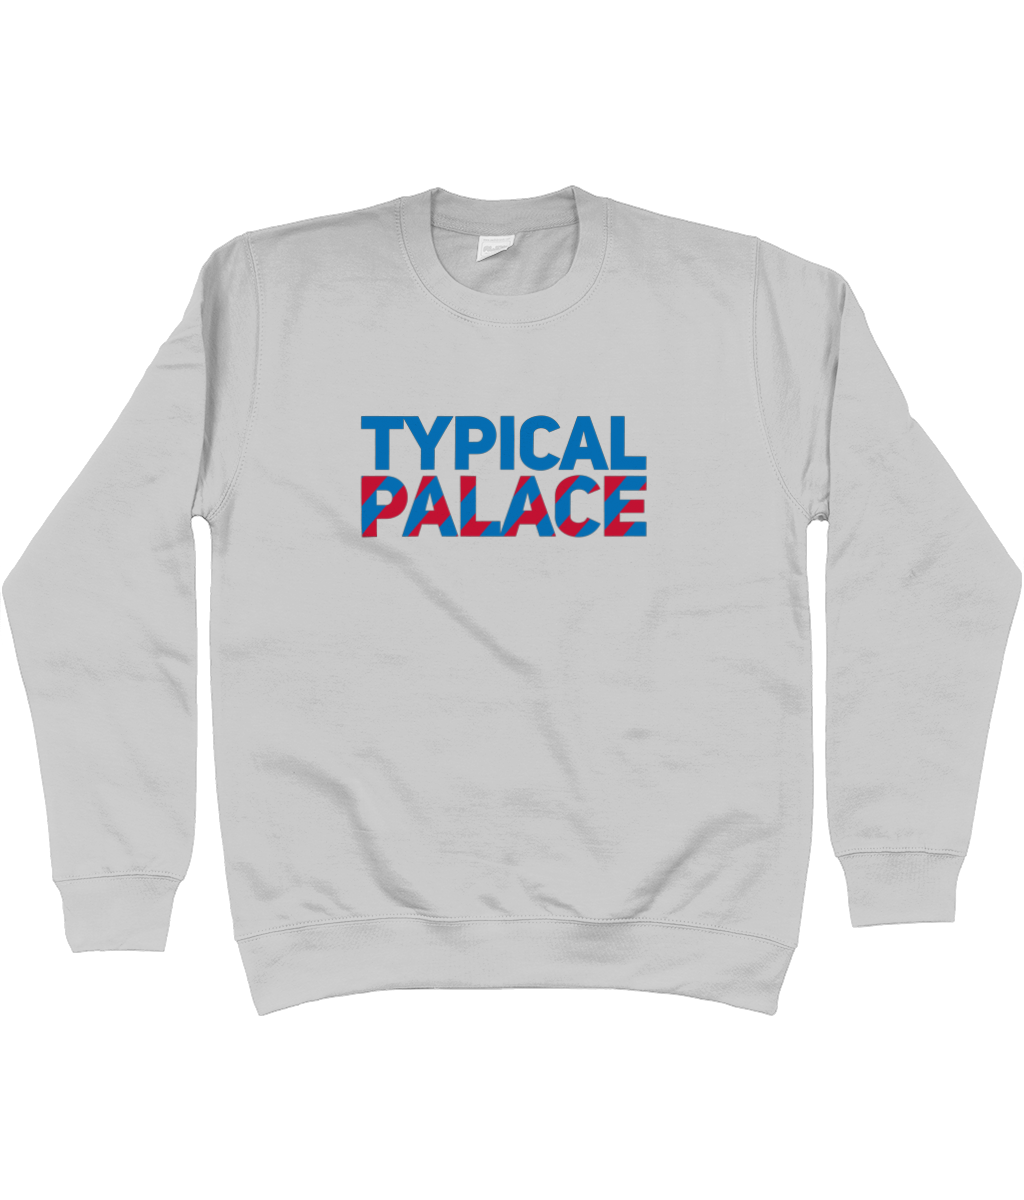 Typical Palace - Sweatshirt